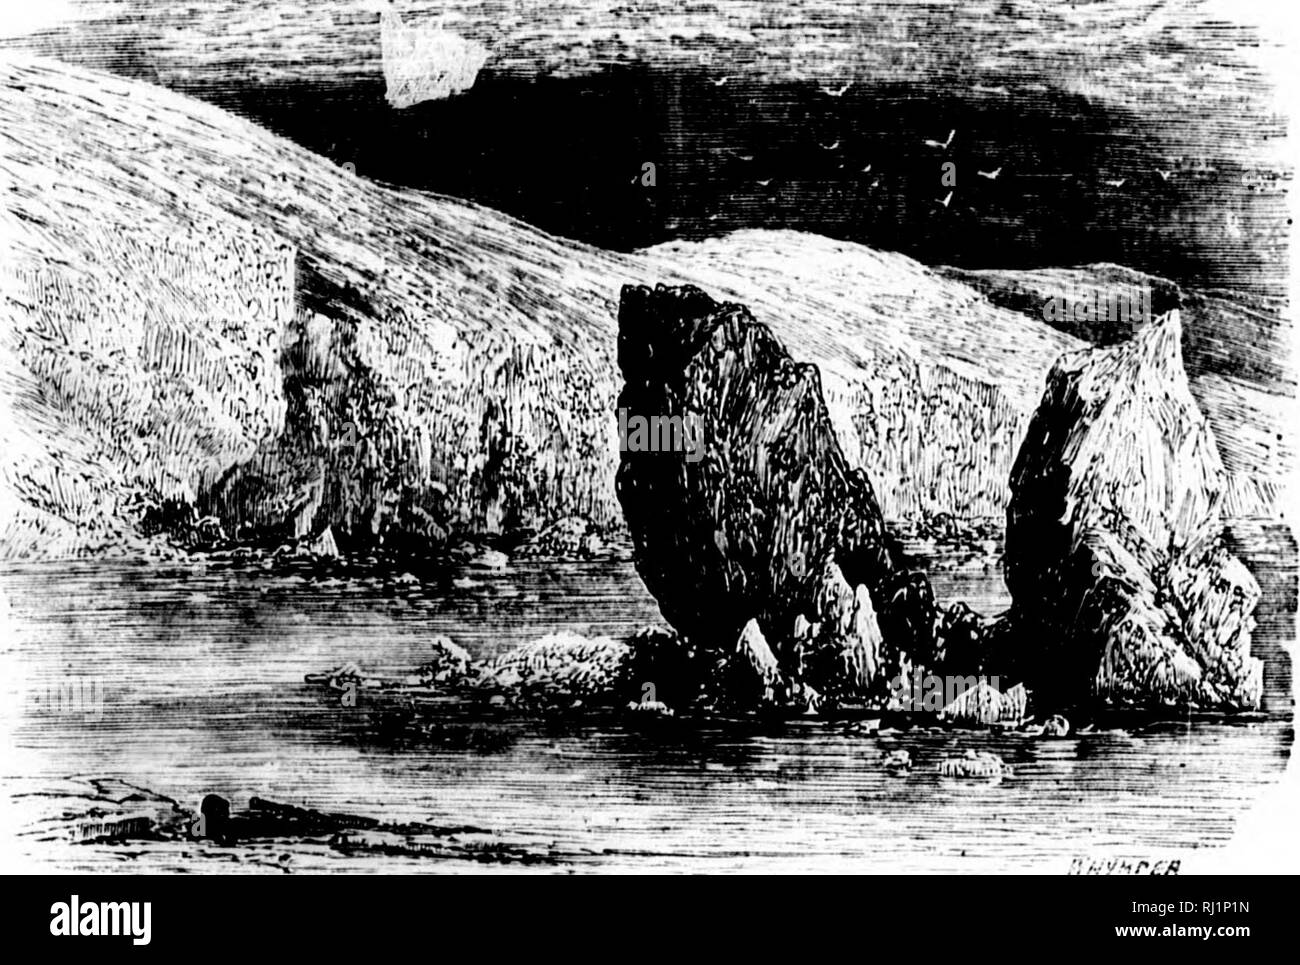 . The polar world [microform] : a popular description of man and nature in the Arctic and Antarctic regions of the globe . Arctic races; Zoology; Races arctiques; Zoologie. r.fii/i'6/[ •rilK (illliAf lUMIli&gt;M)T lil.ACIIK. (Frinii an oi-igiiiiil sketch liy I'reilerick Wliyiniicr.) CHAPTER XXXII[. RECENT ARCTIC DISCOVERIES. K'.iiic siils up Sinitli's .'^ unil ill tliu • Ailvatici'' (liS.)3) -WiiiliTs in llftii^seliier Hay-Slfditu JouriR'y iiloiiii the C'o.isi dt' ( IitiiiImihI —Tlio •'I'iircL' Knitlici&quot; Tui'ivts'—Ti'iinysiiii's Mominii'iit-Tlio (treat Ilunilinicit (ilaeier -Dr. Hayes iT Stock Photo